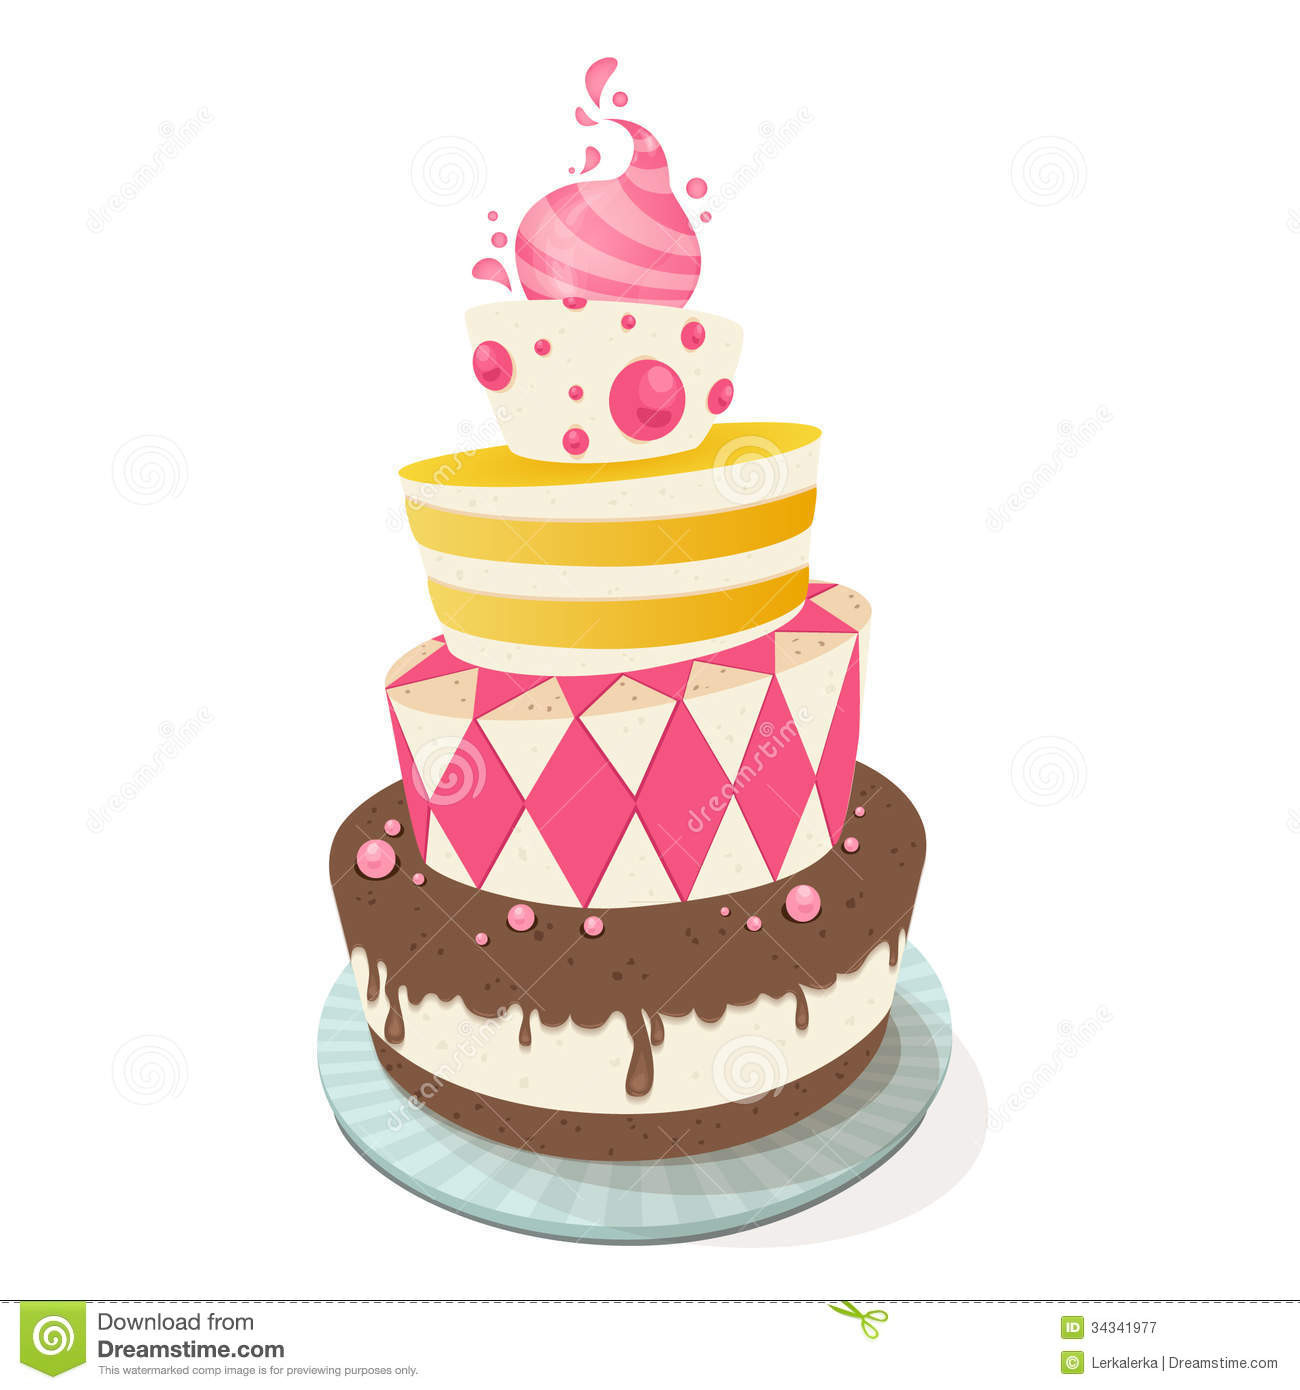 Birthday Cake Illustration
 Birthday Cake Royalty Free Stock graphy Image